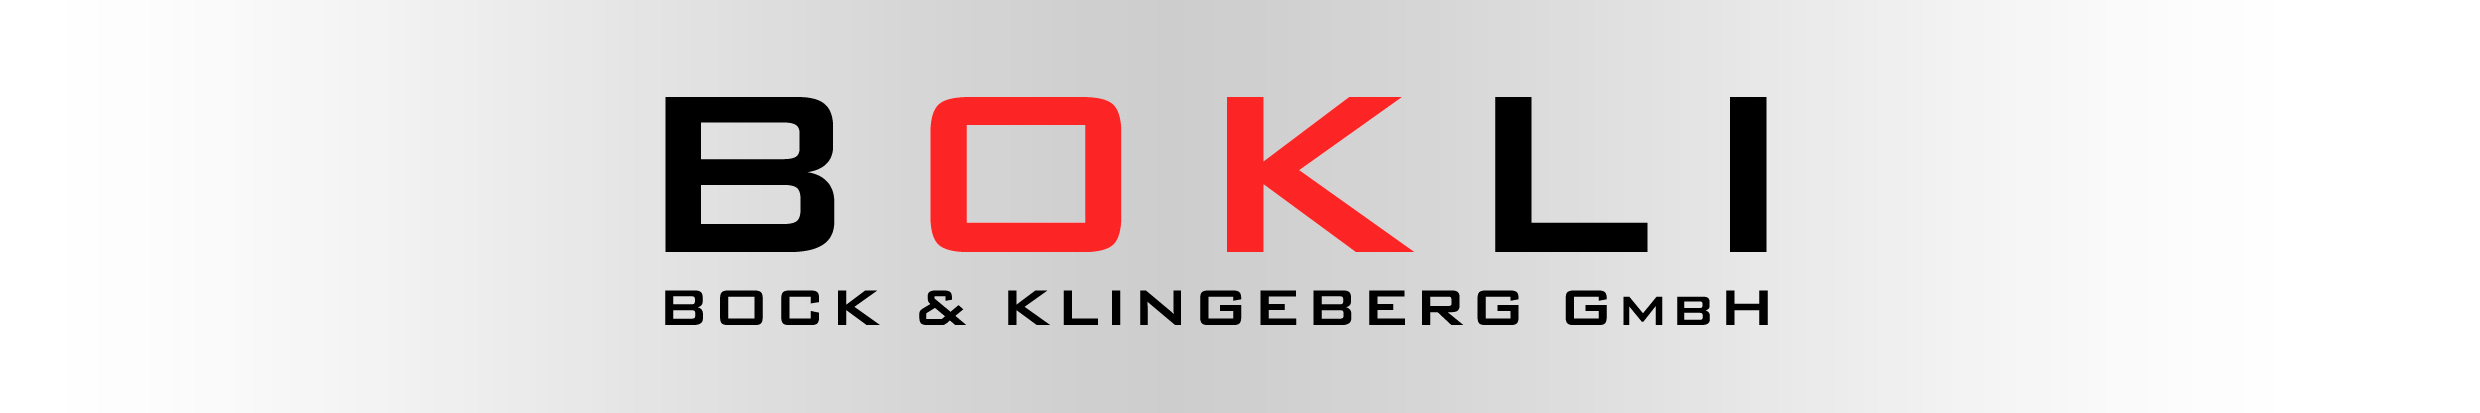 BOKLI - Bock & Klingeberg GmbH